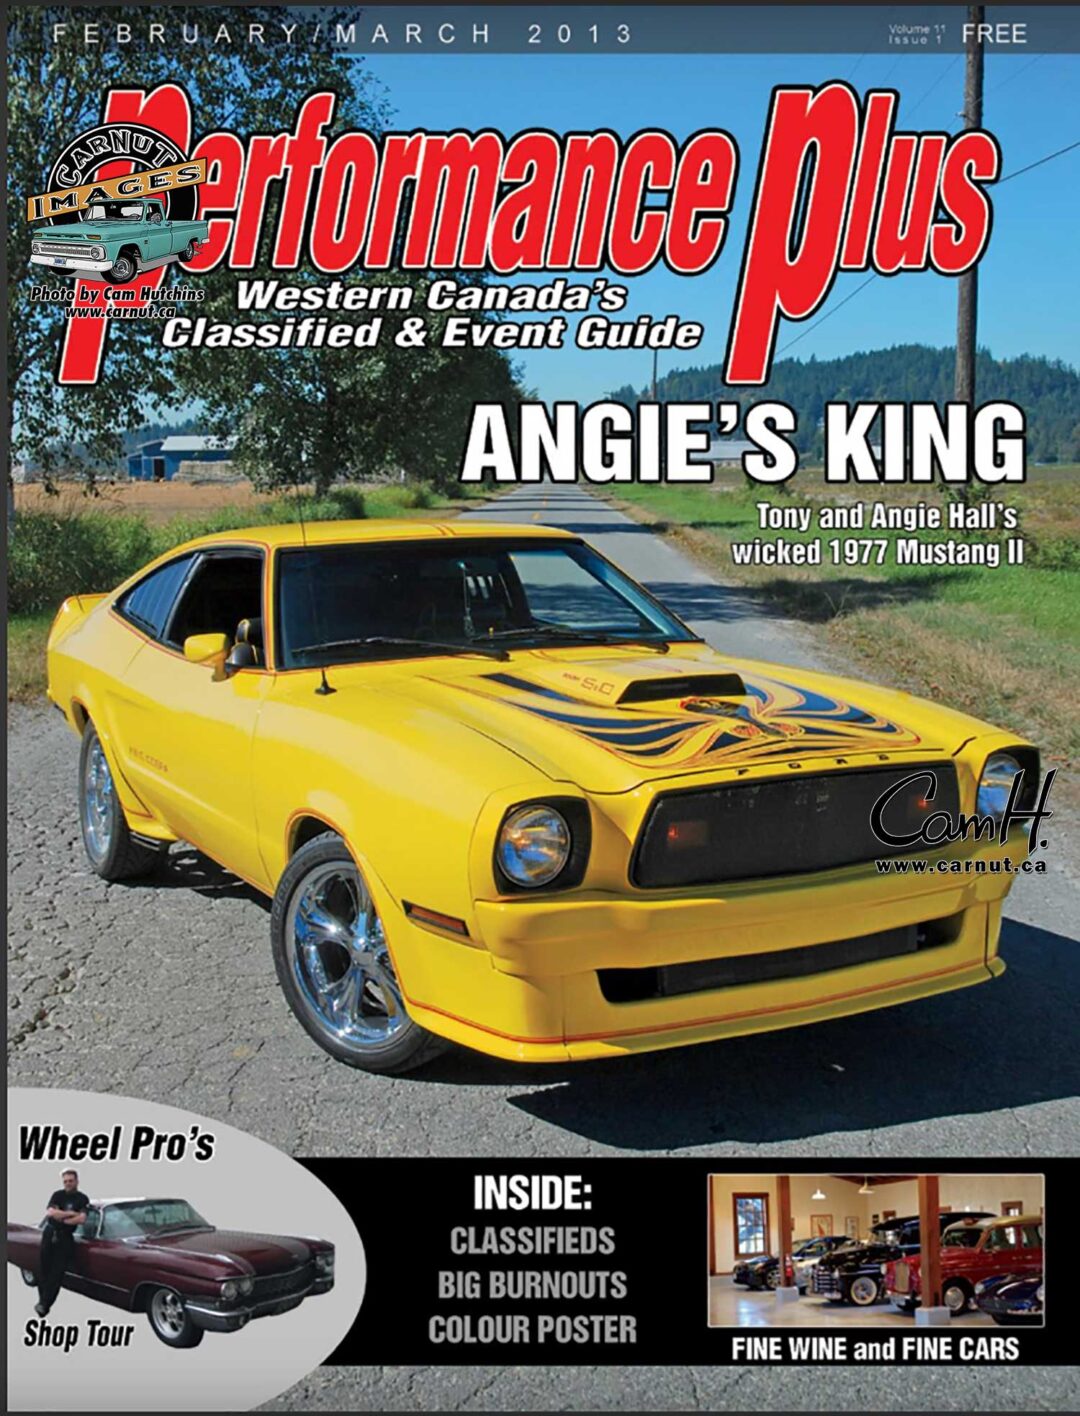 Angies King Mustang II